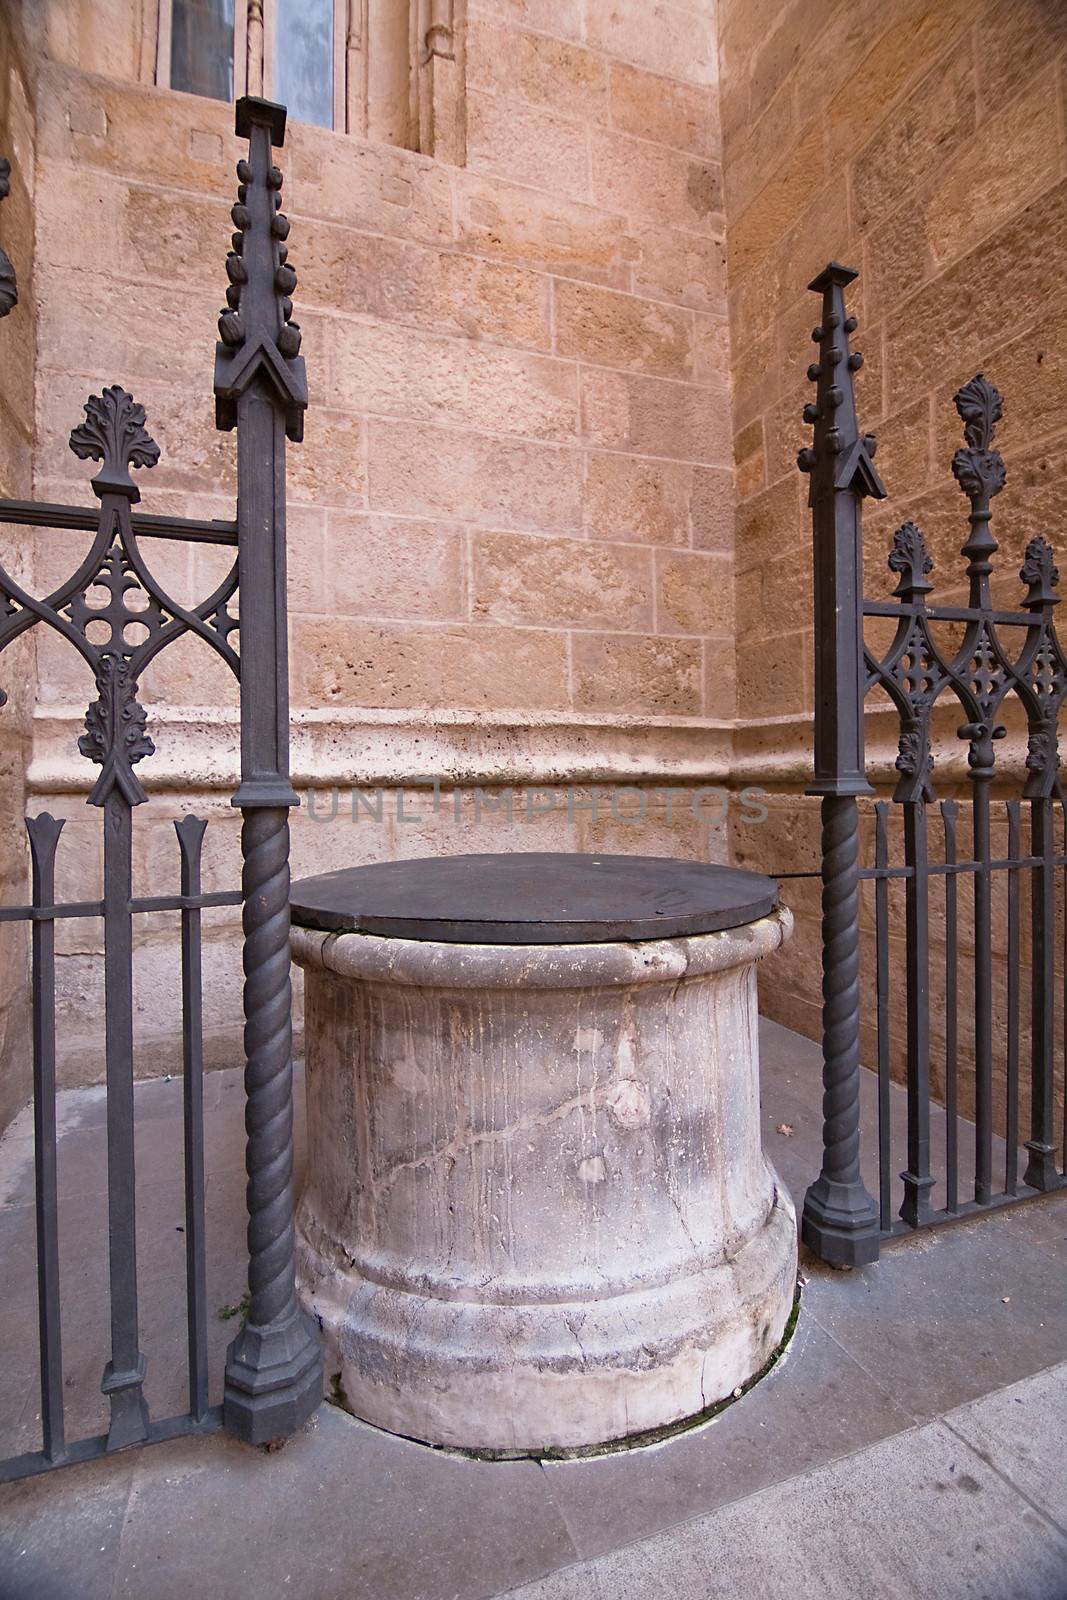 Well of stone. Granada, Spain by digicomphoto